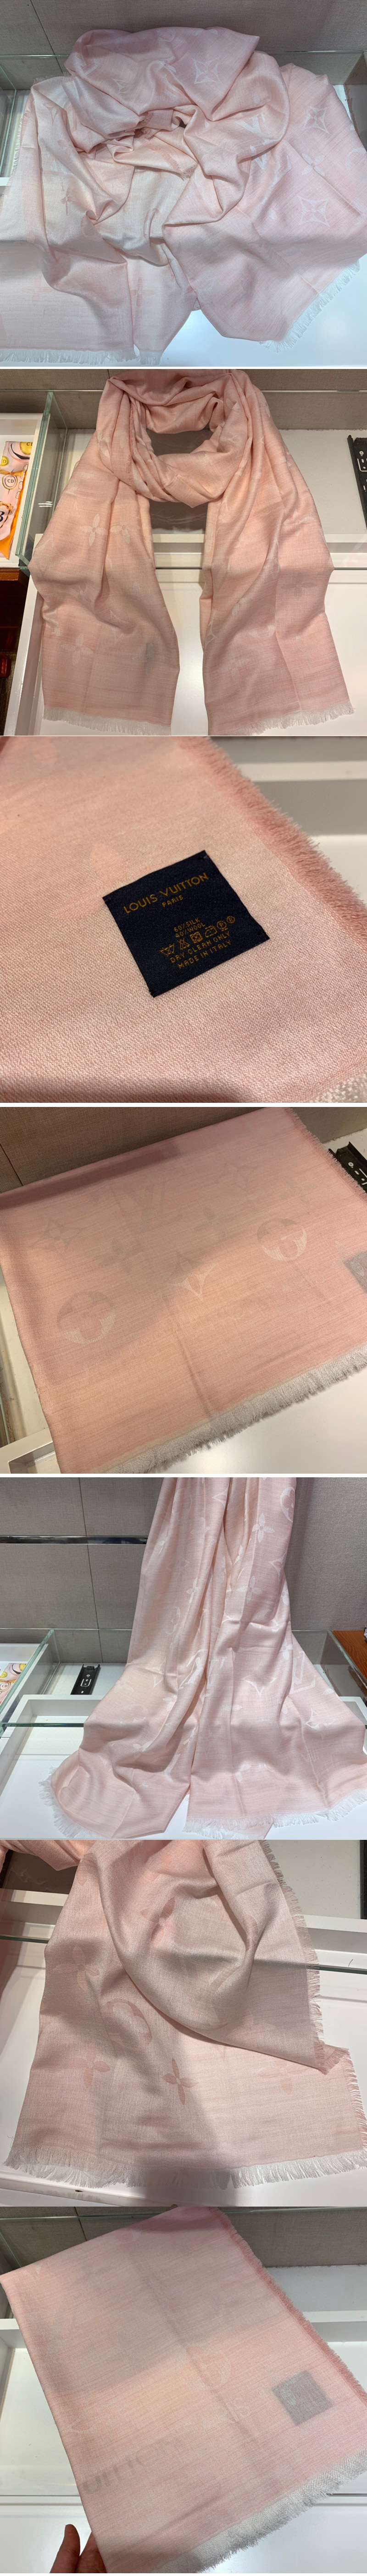 Replica Louis Vuitton M71386 LV Daily Monogram stole Scarf in Monogram Pink